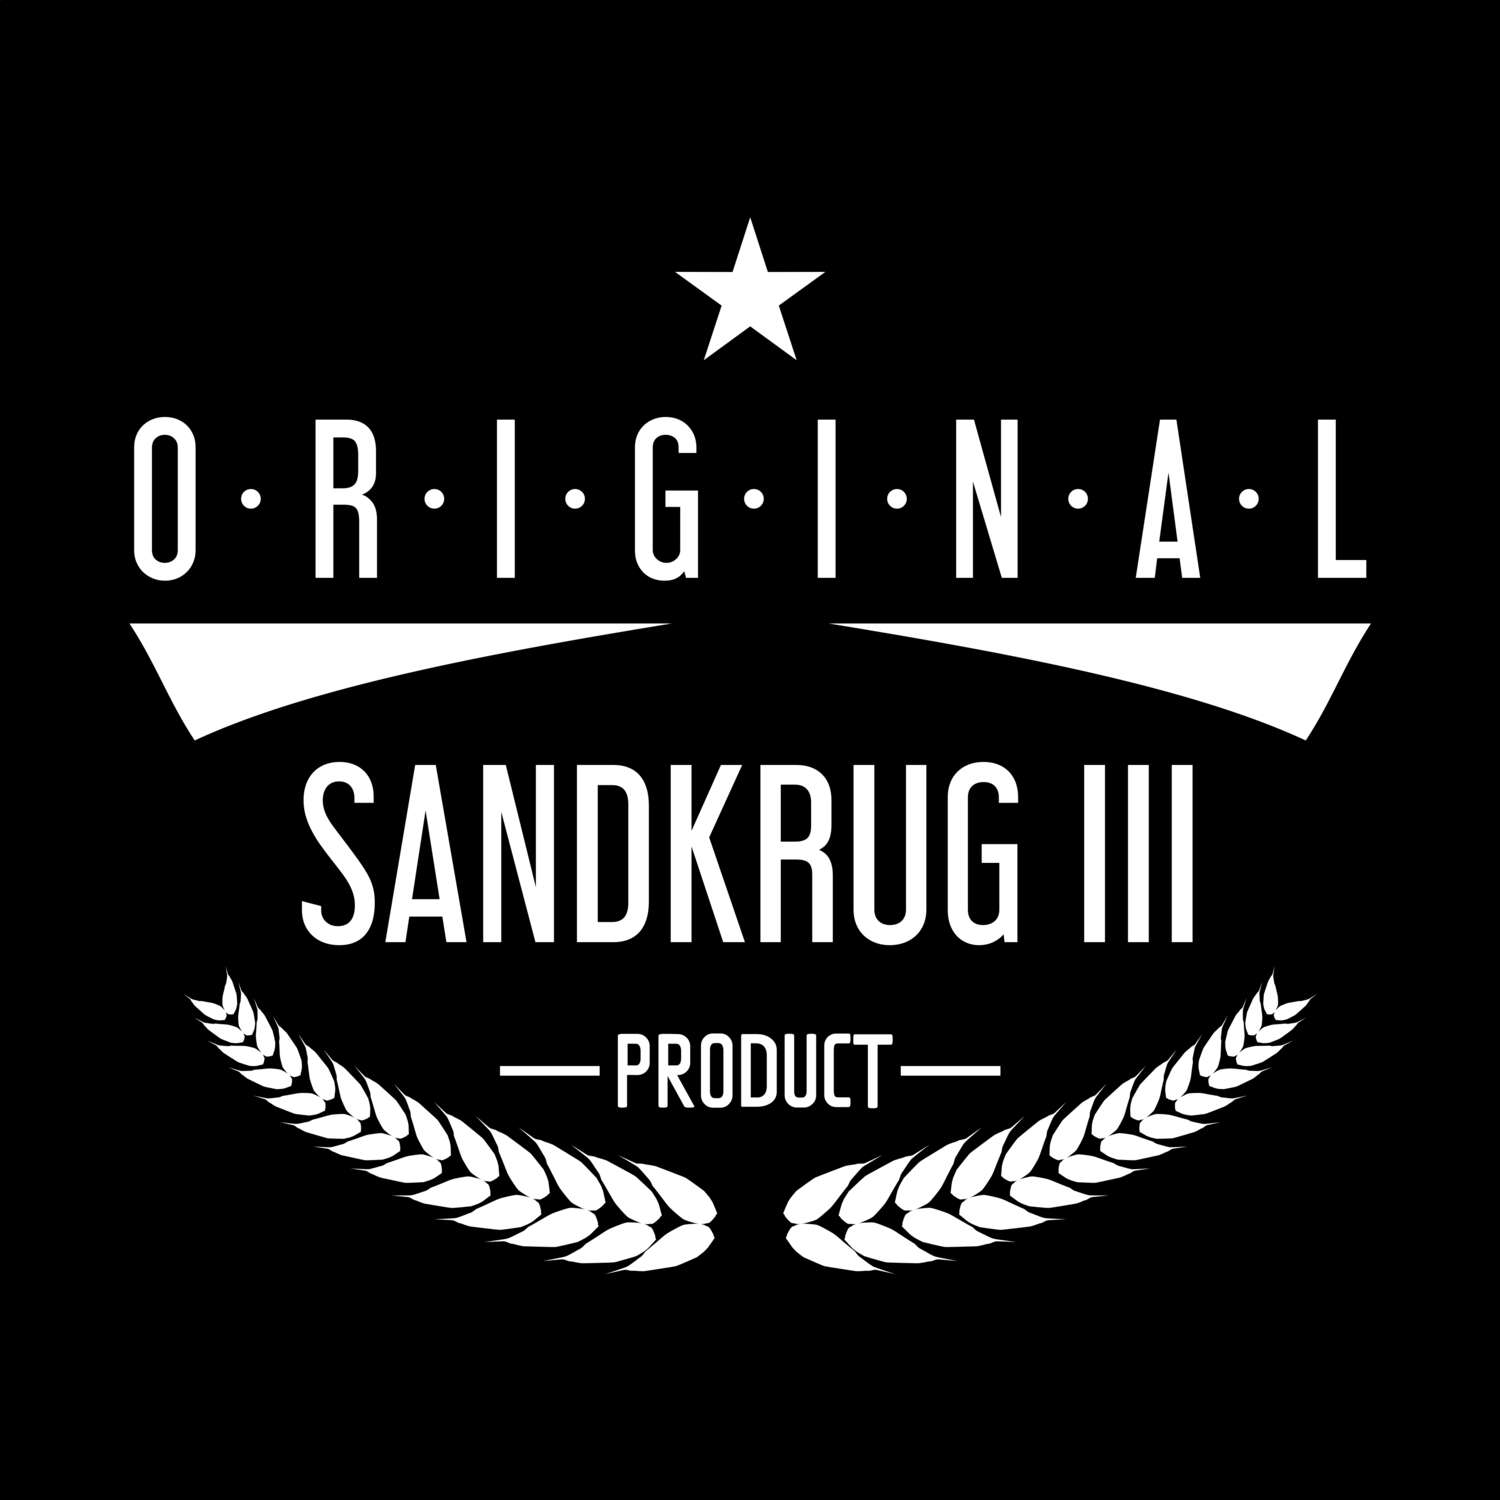 Sandkrug III T-Shirt »Original Product«